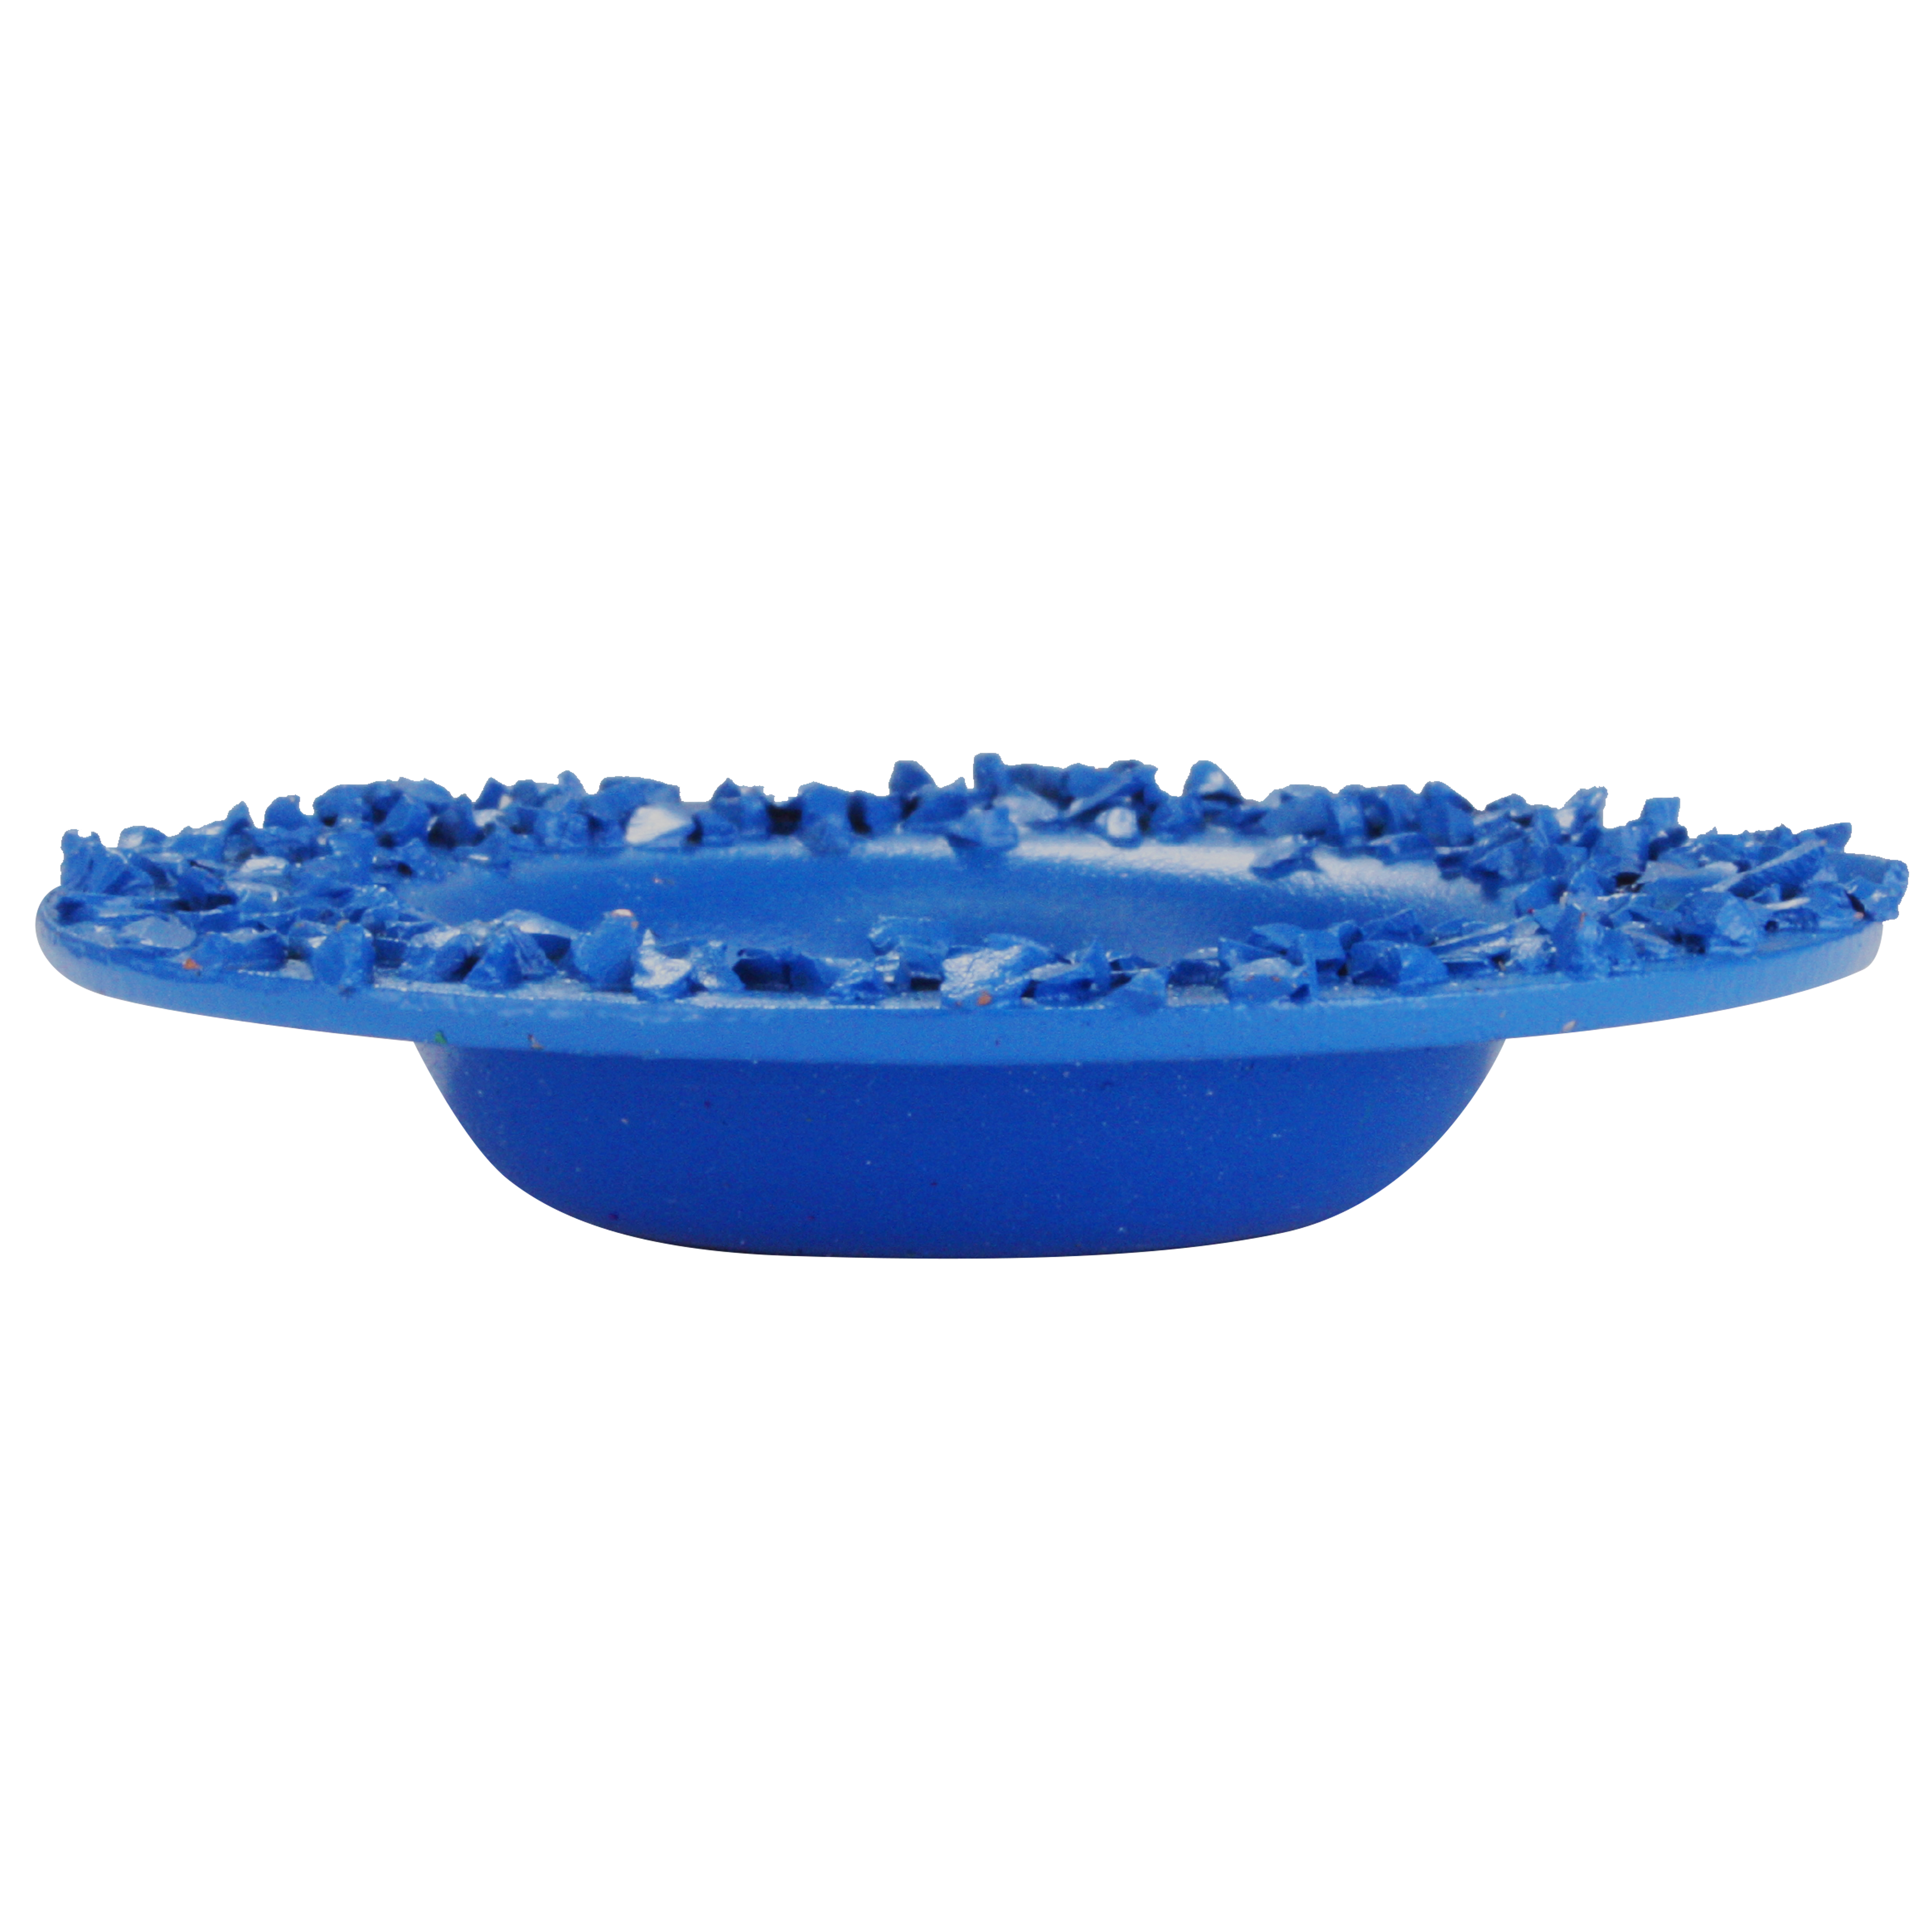 Blue Medium Grit Disc